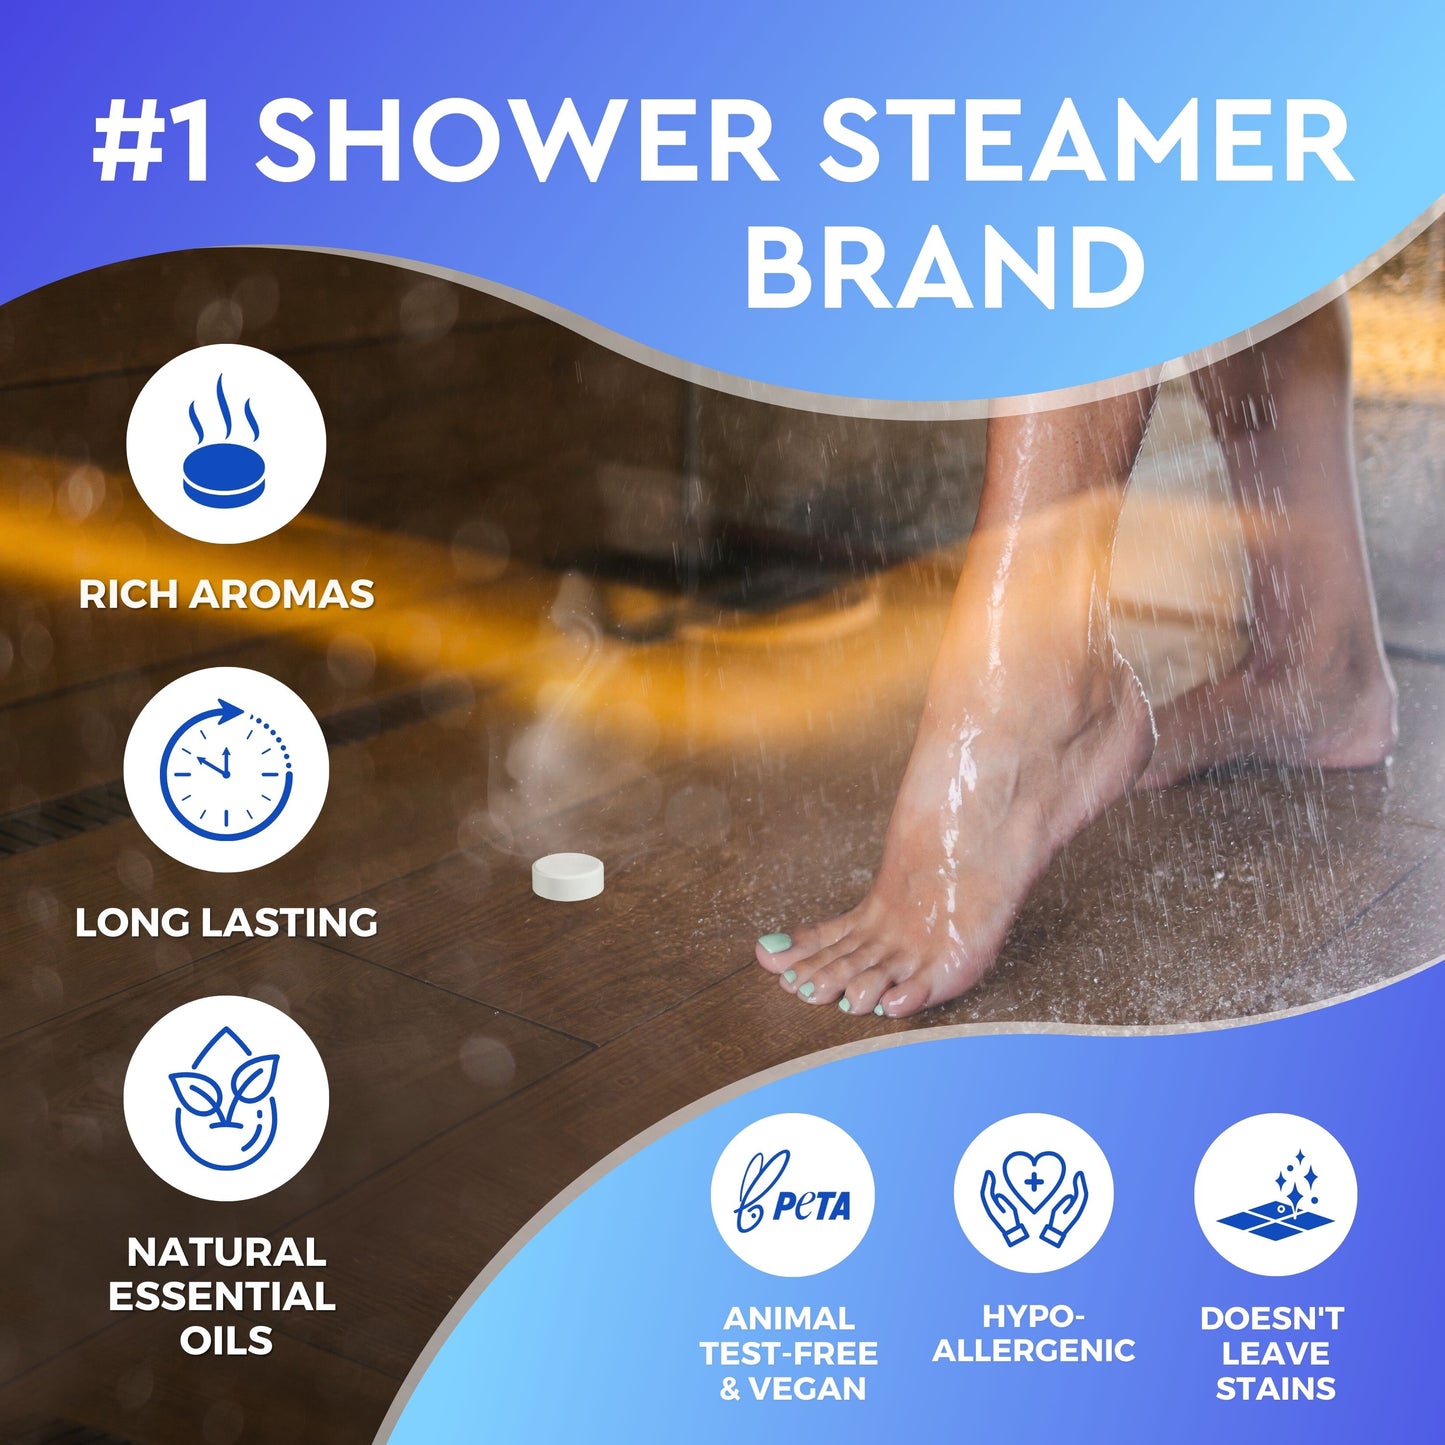 Cleverfy Blue Megapack of 18 Shower Steamers